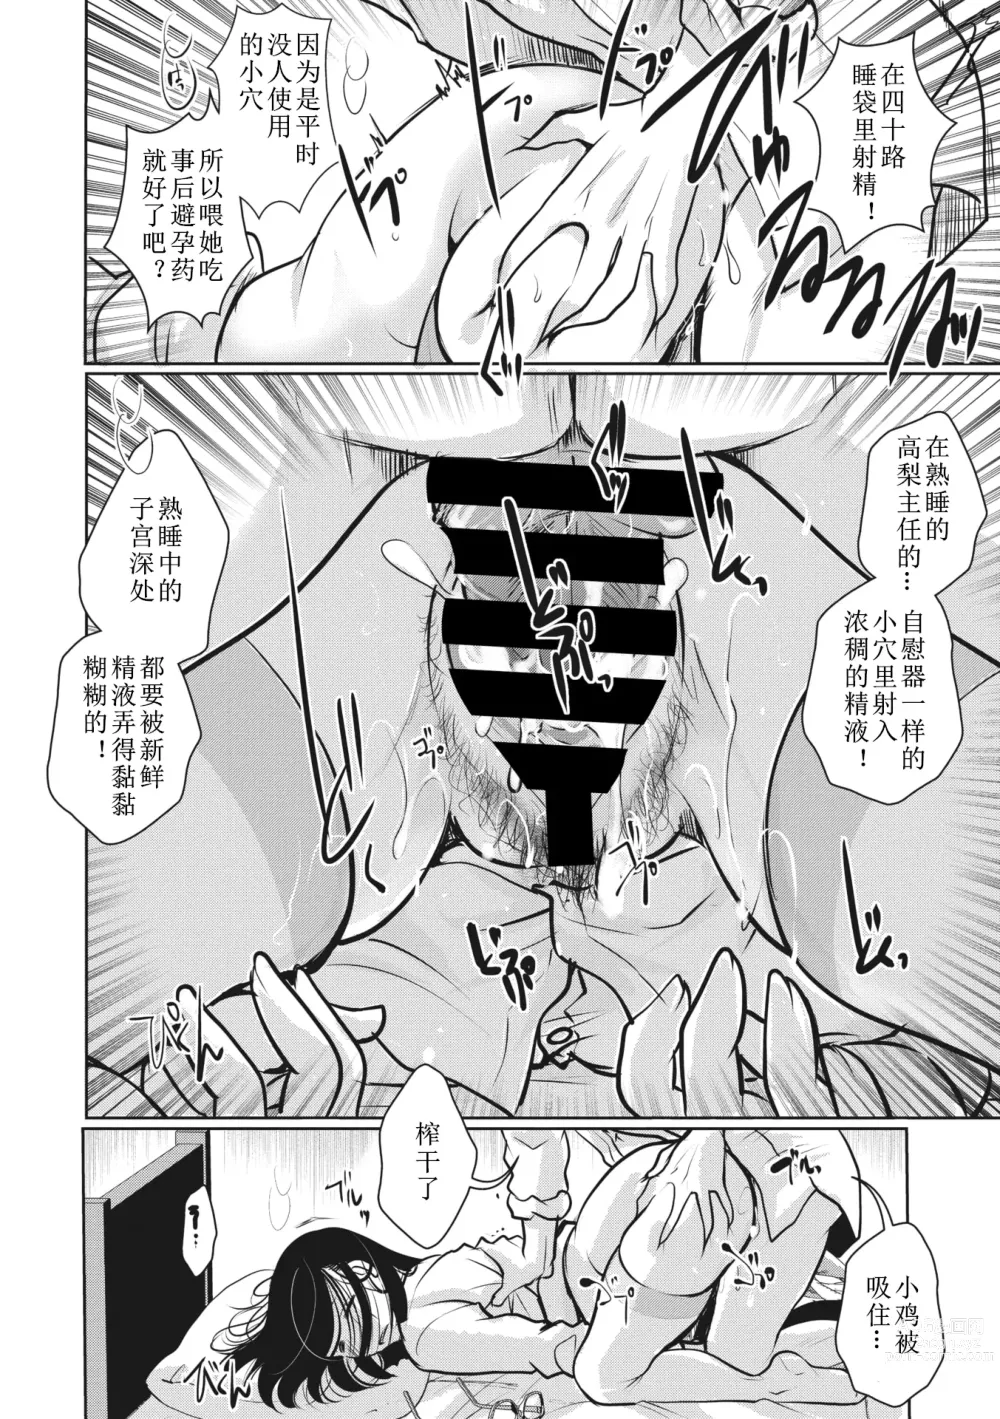 Page 6 of manga 主任今晚也没觉察